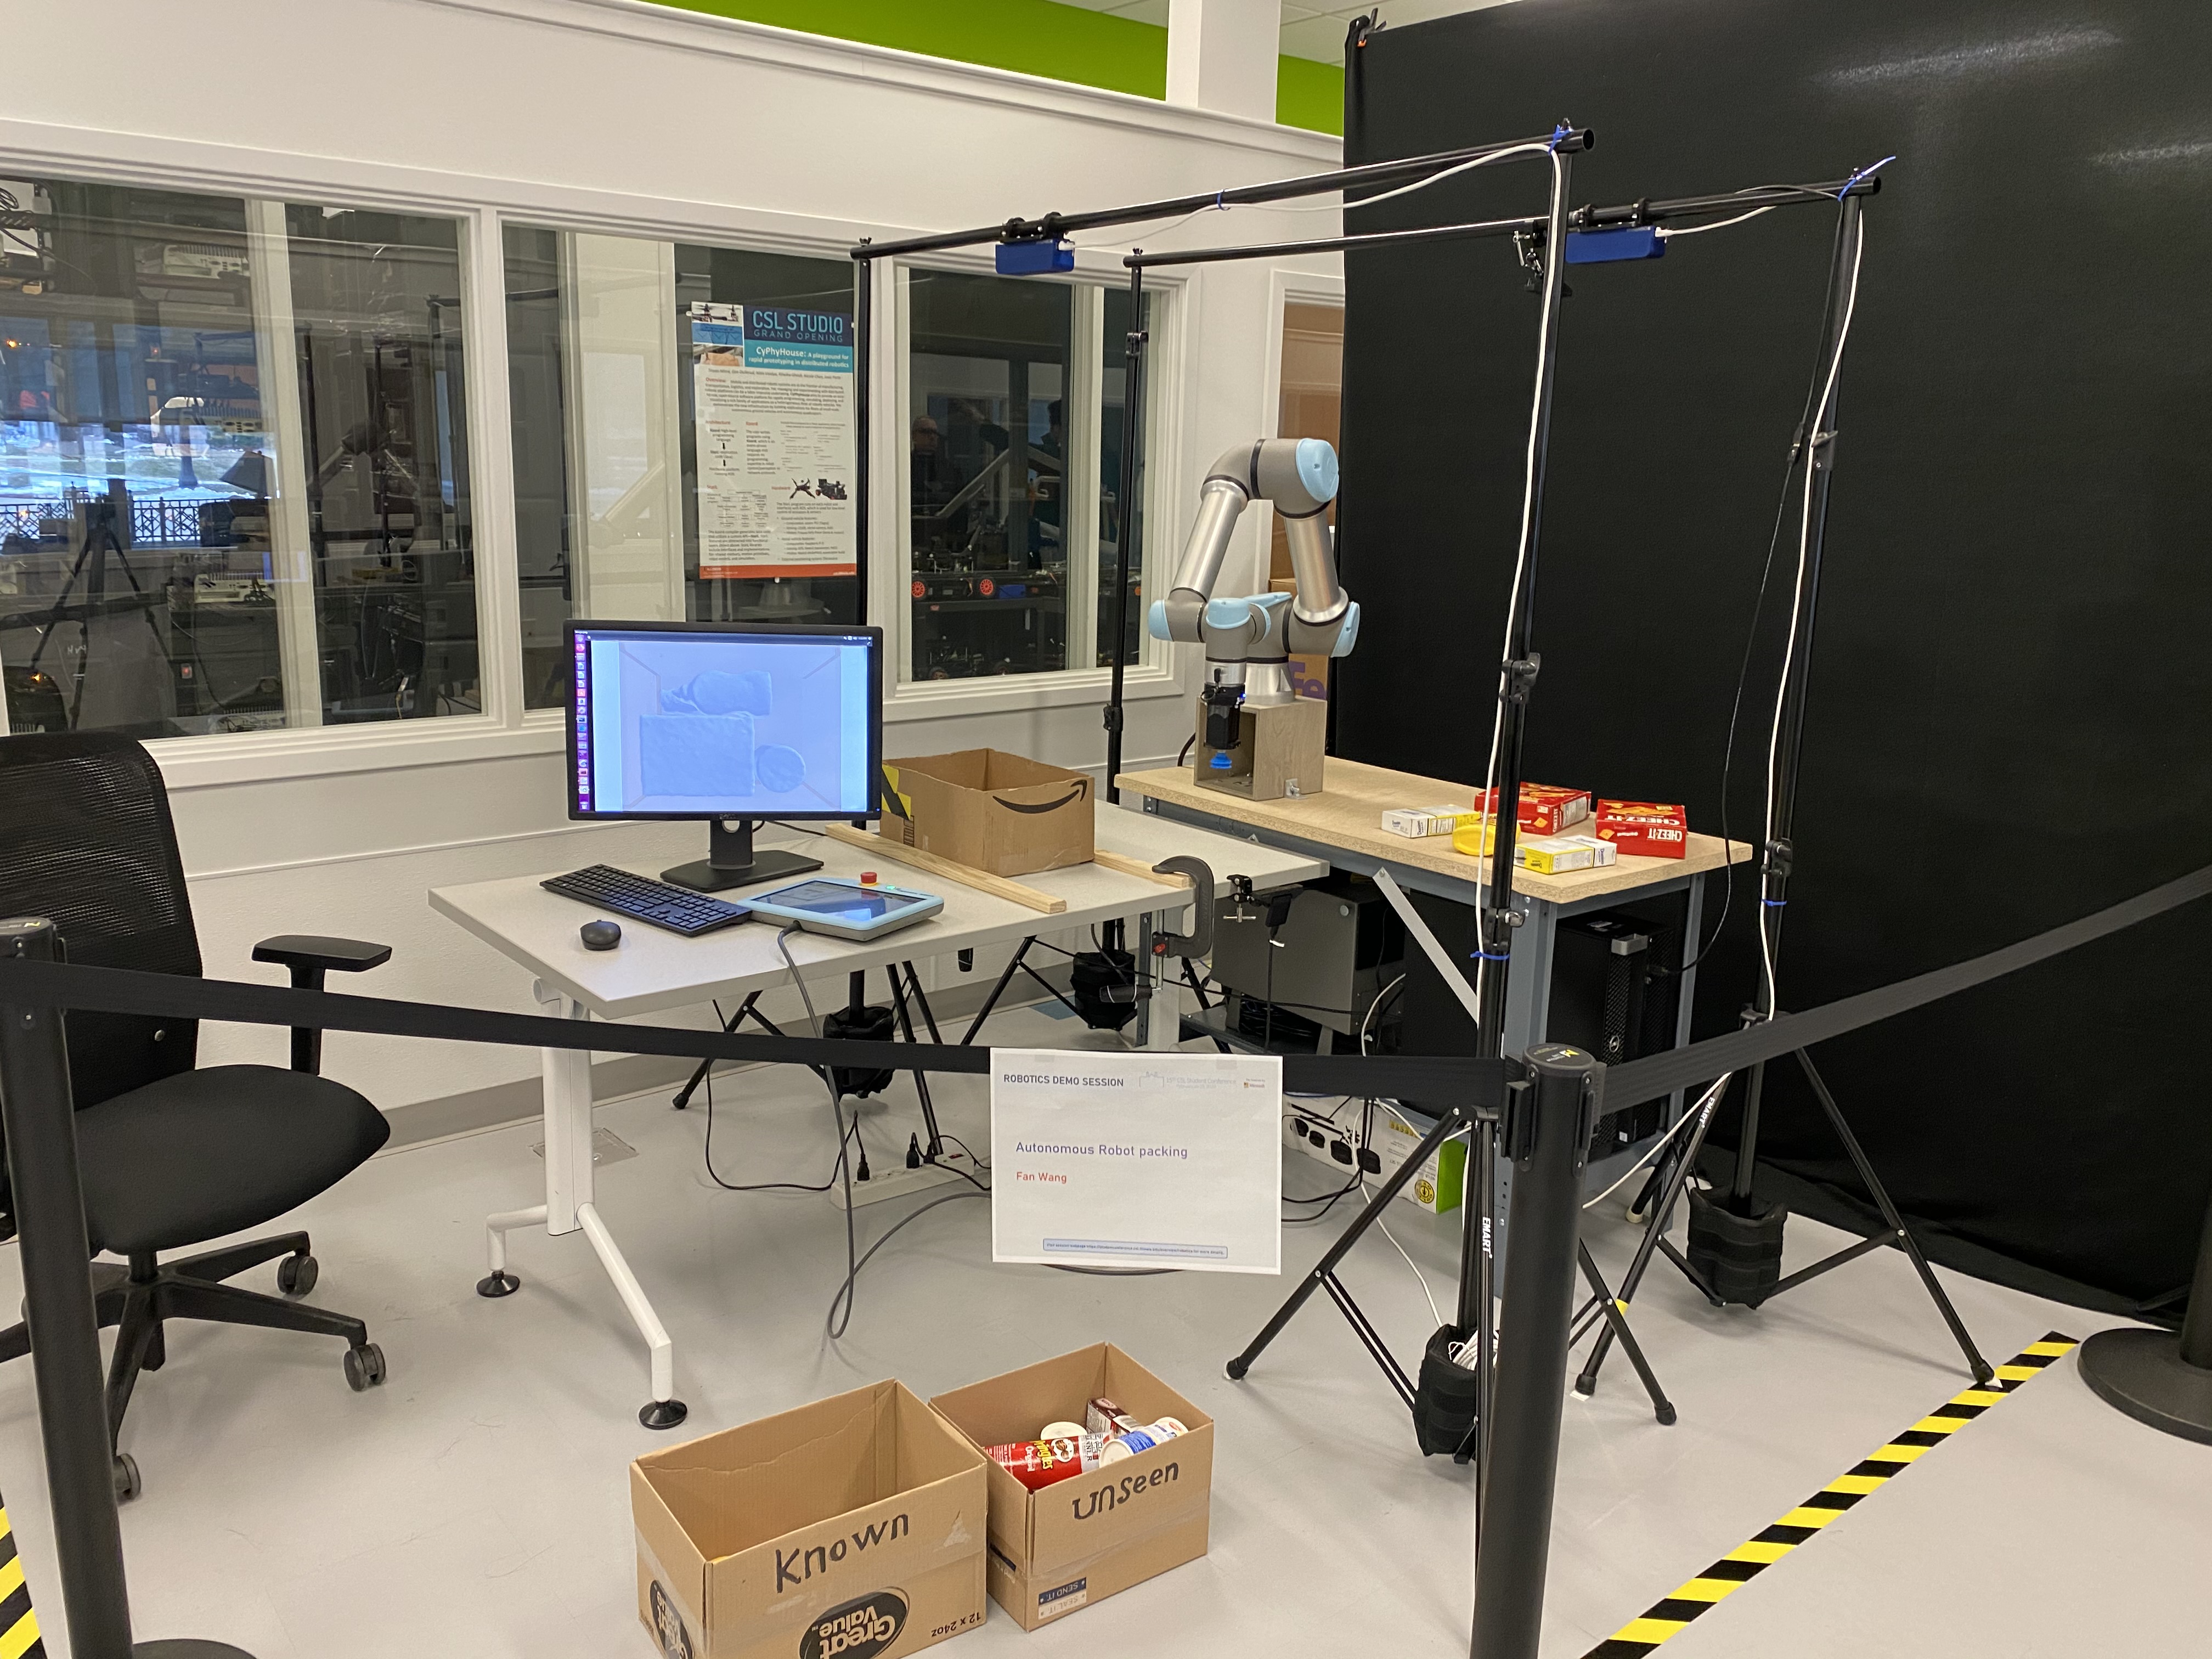 System prototype setup at CSL studio